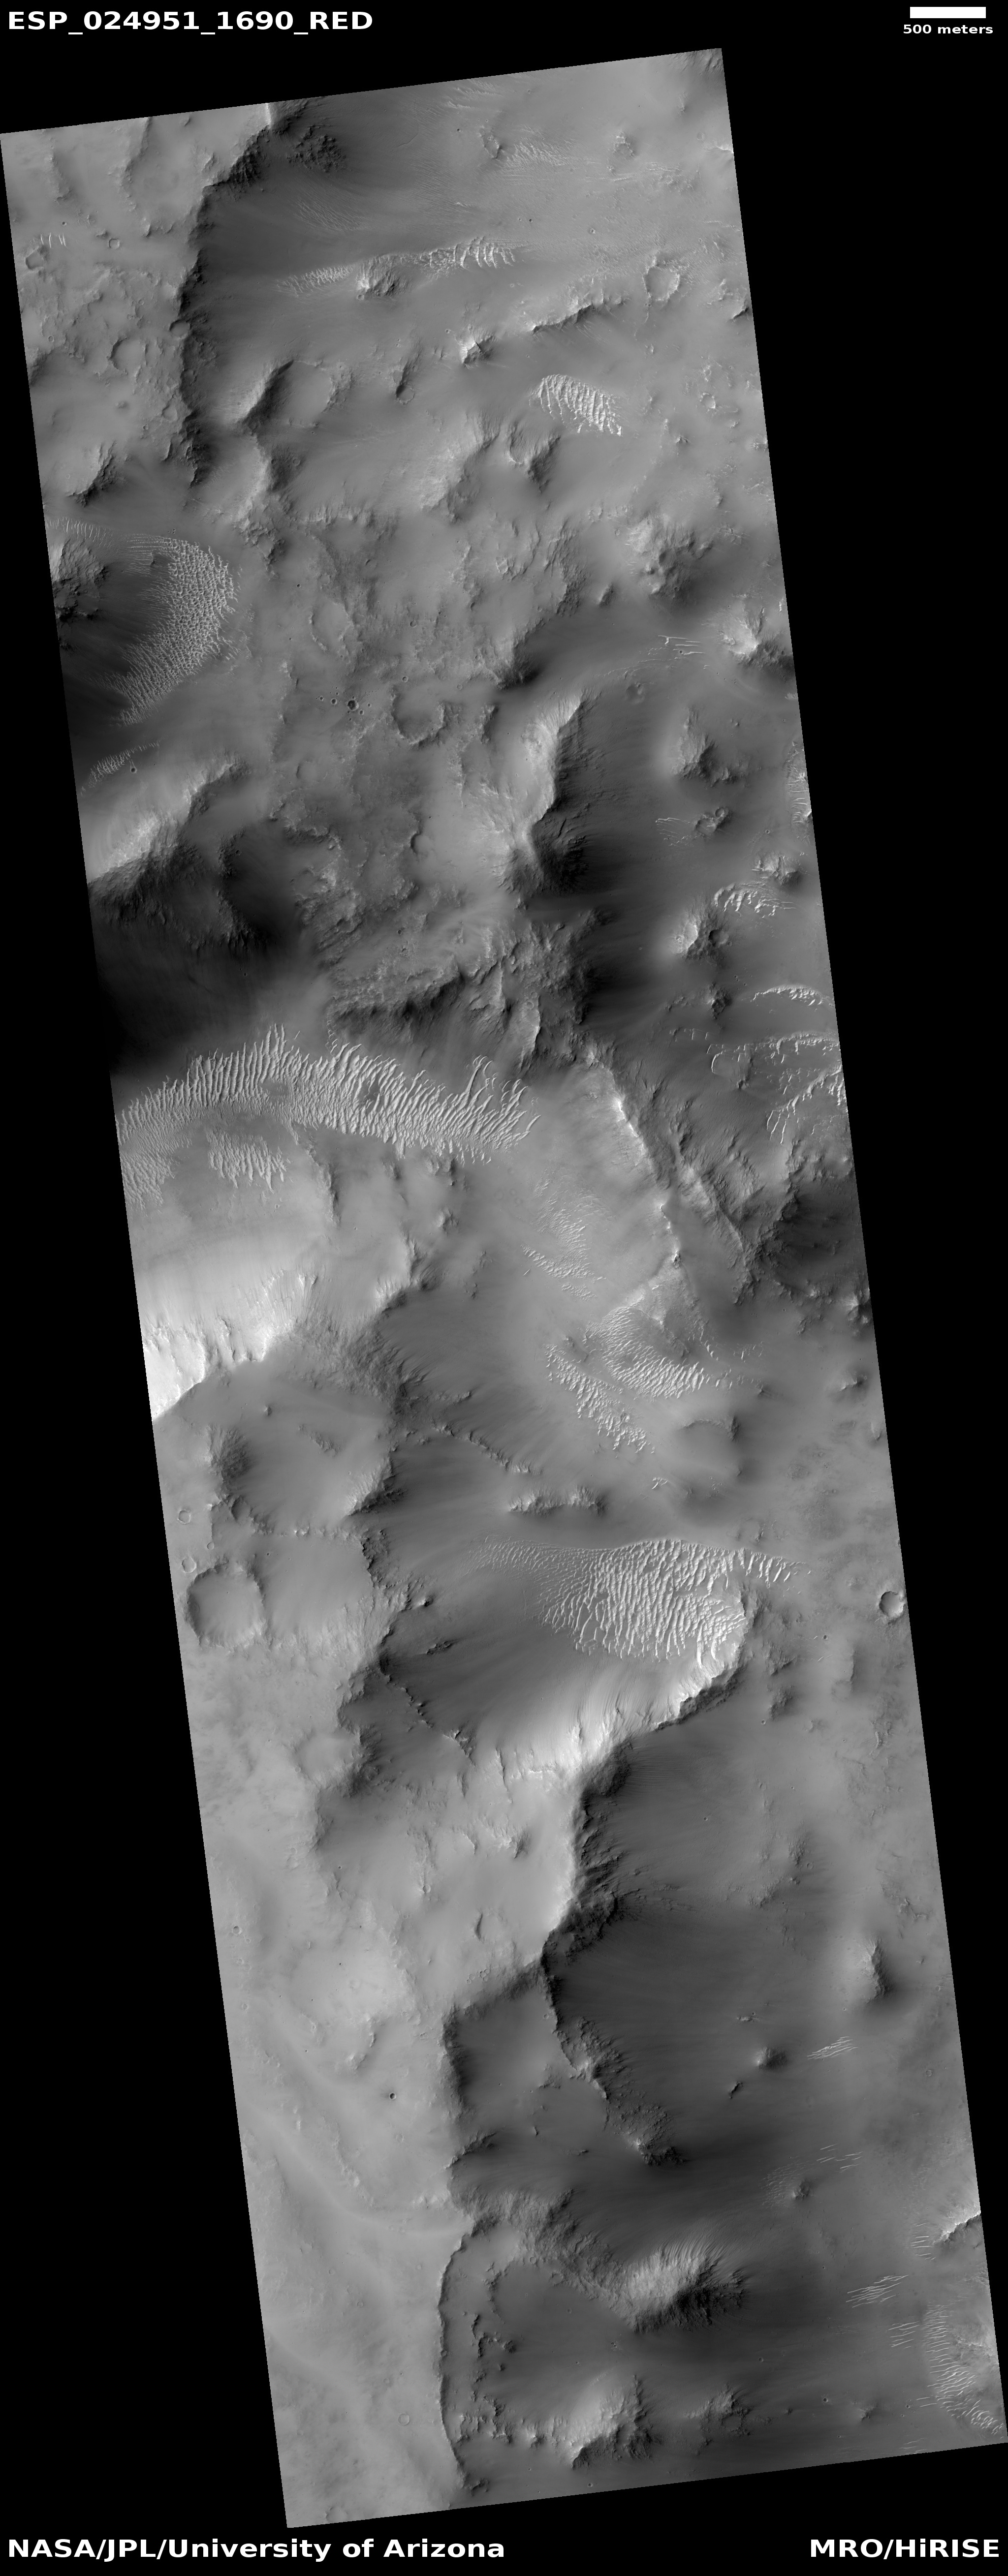 HiRISE | Valley Breaching Rim of Madler Crater (ESP_024951_1690)